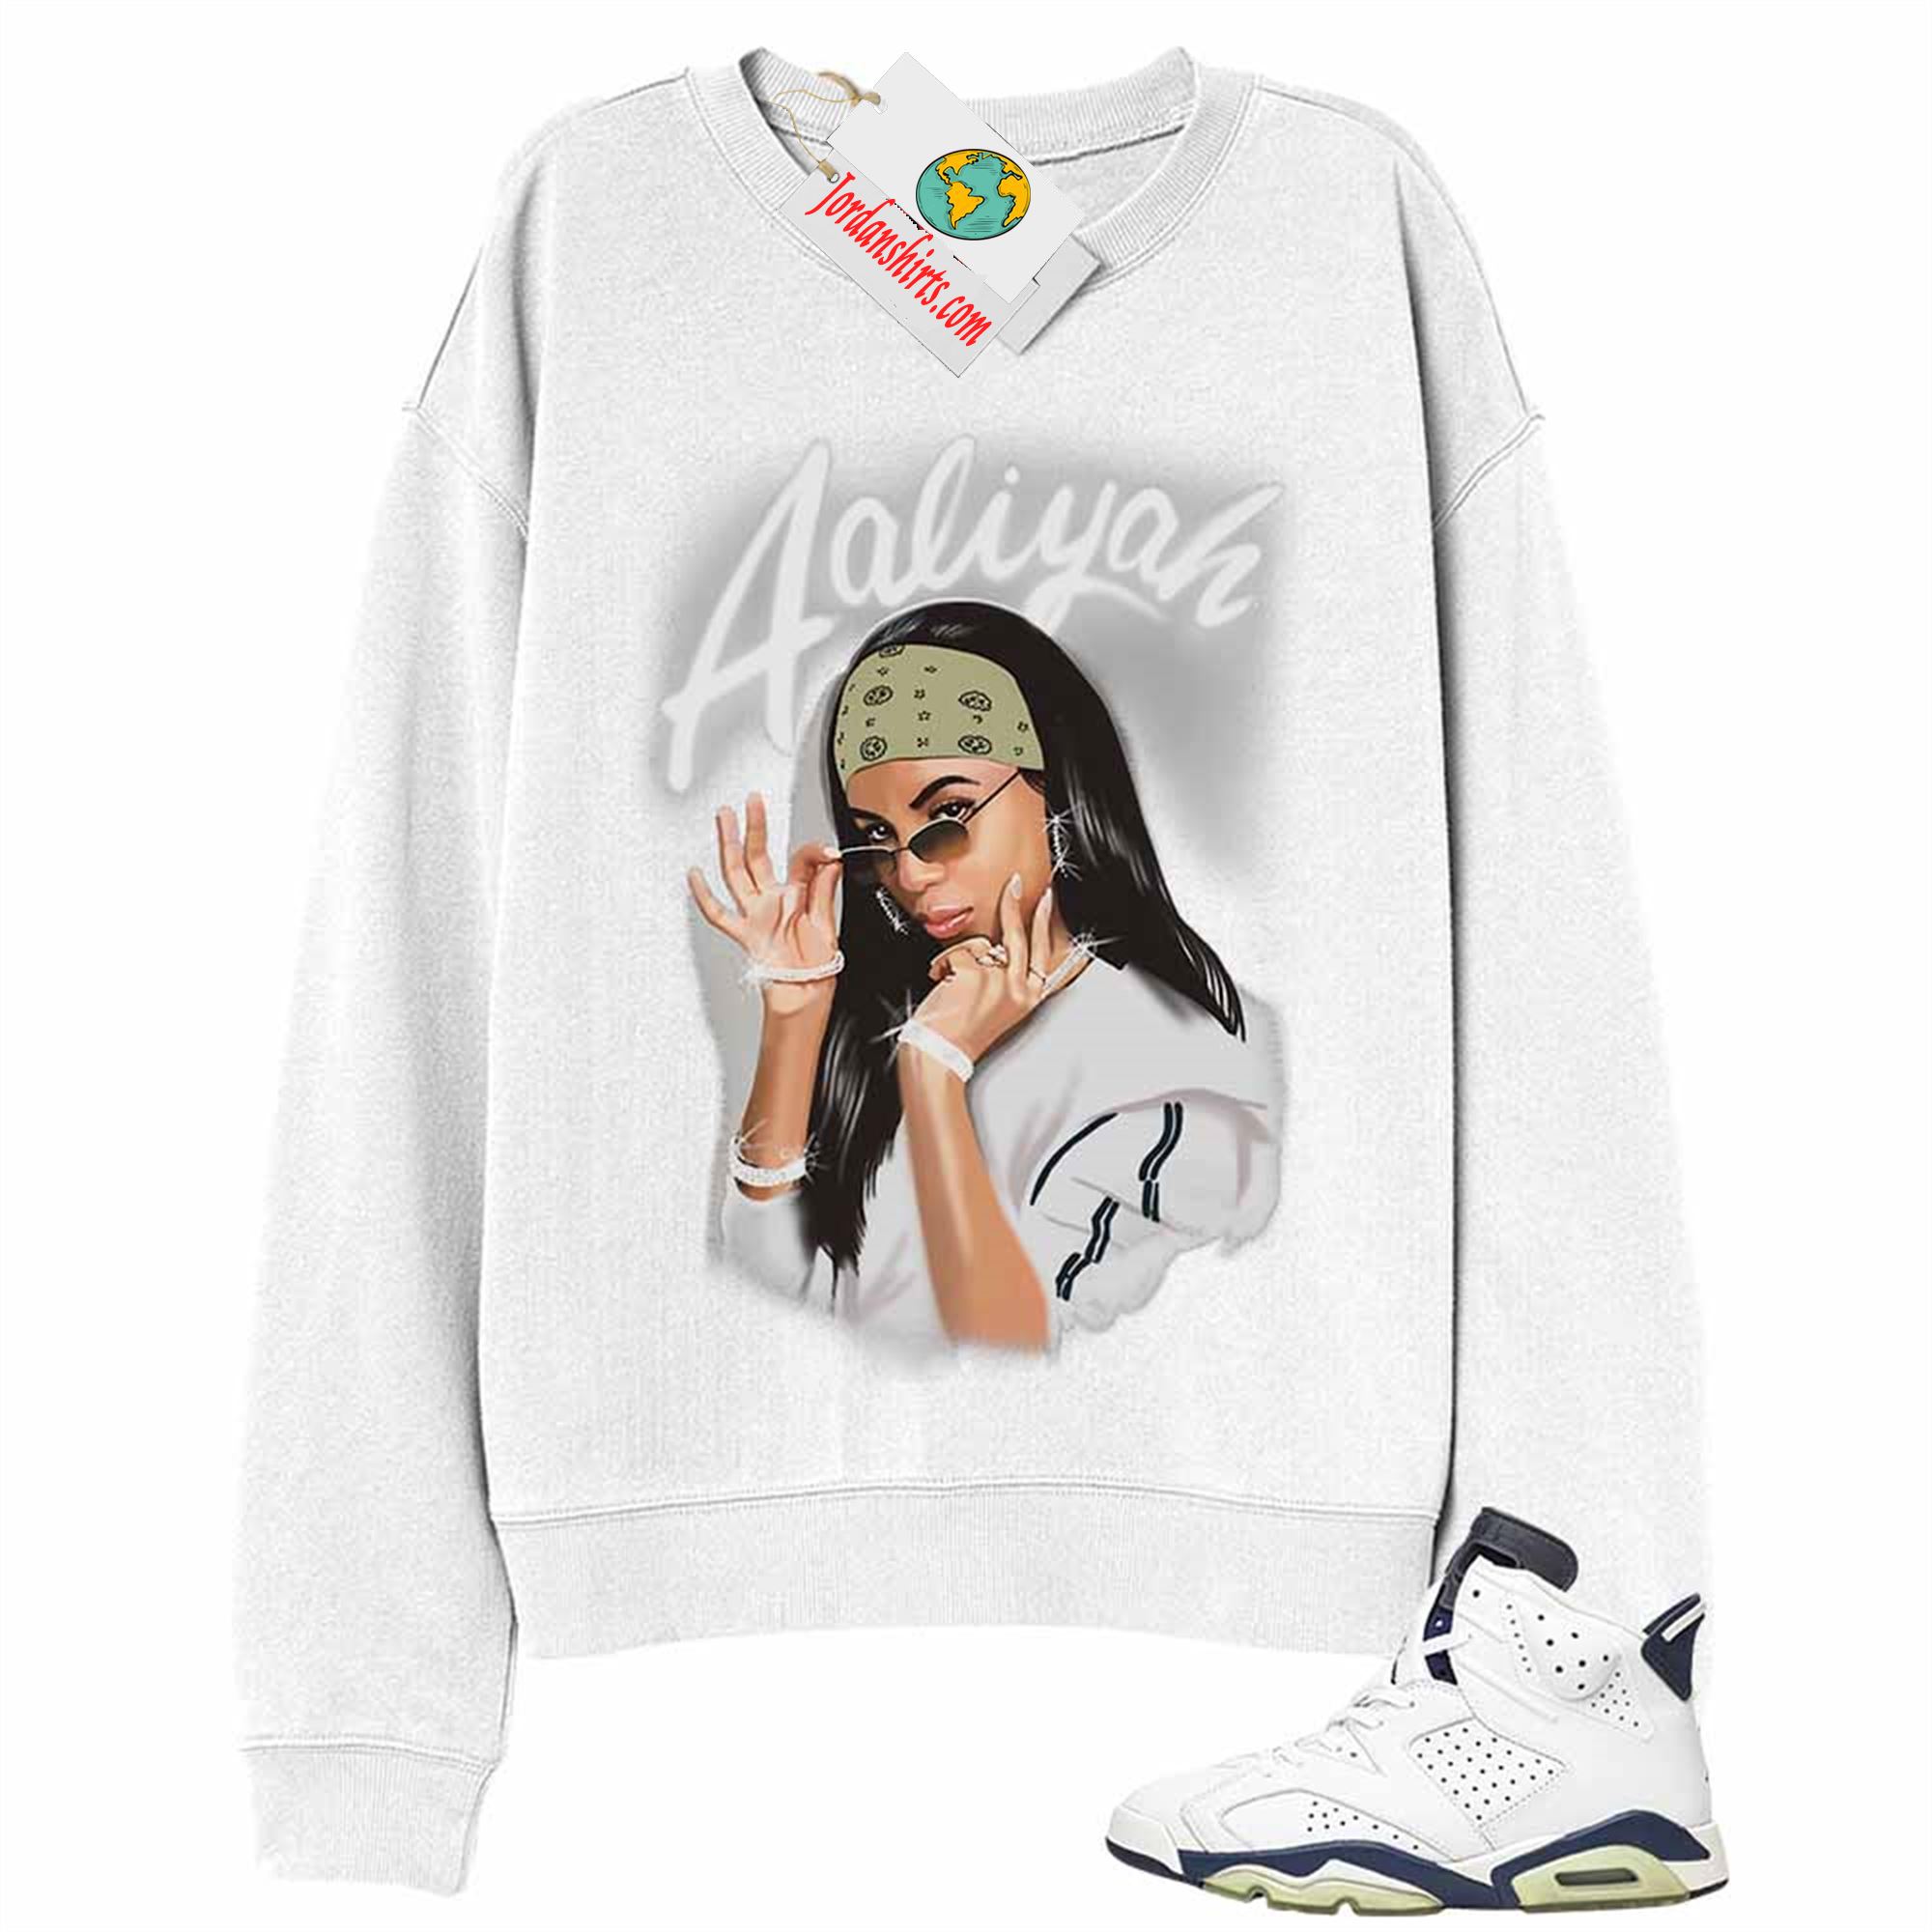 Jordan 6 Sweatshirt, Aaliyah Airbrush White Sweatshirt Air Jordan 6 Midnight Navy 6s Full Size Up To 5xl